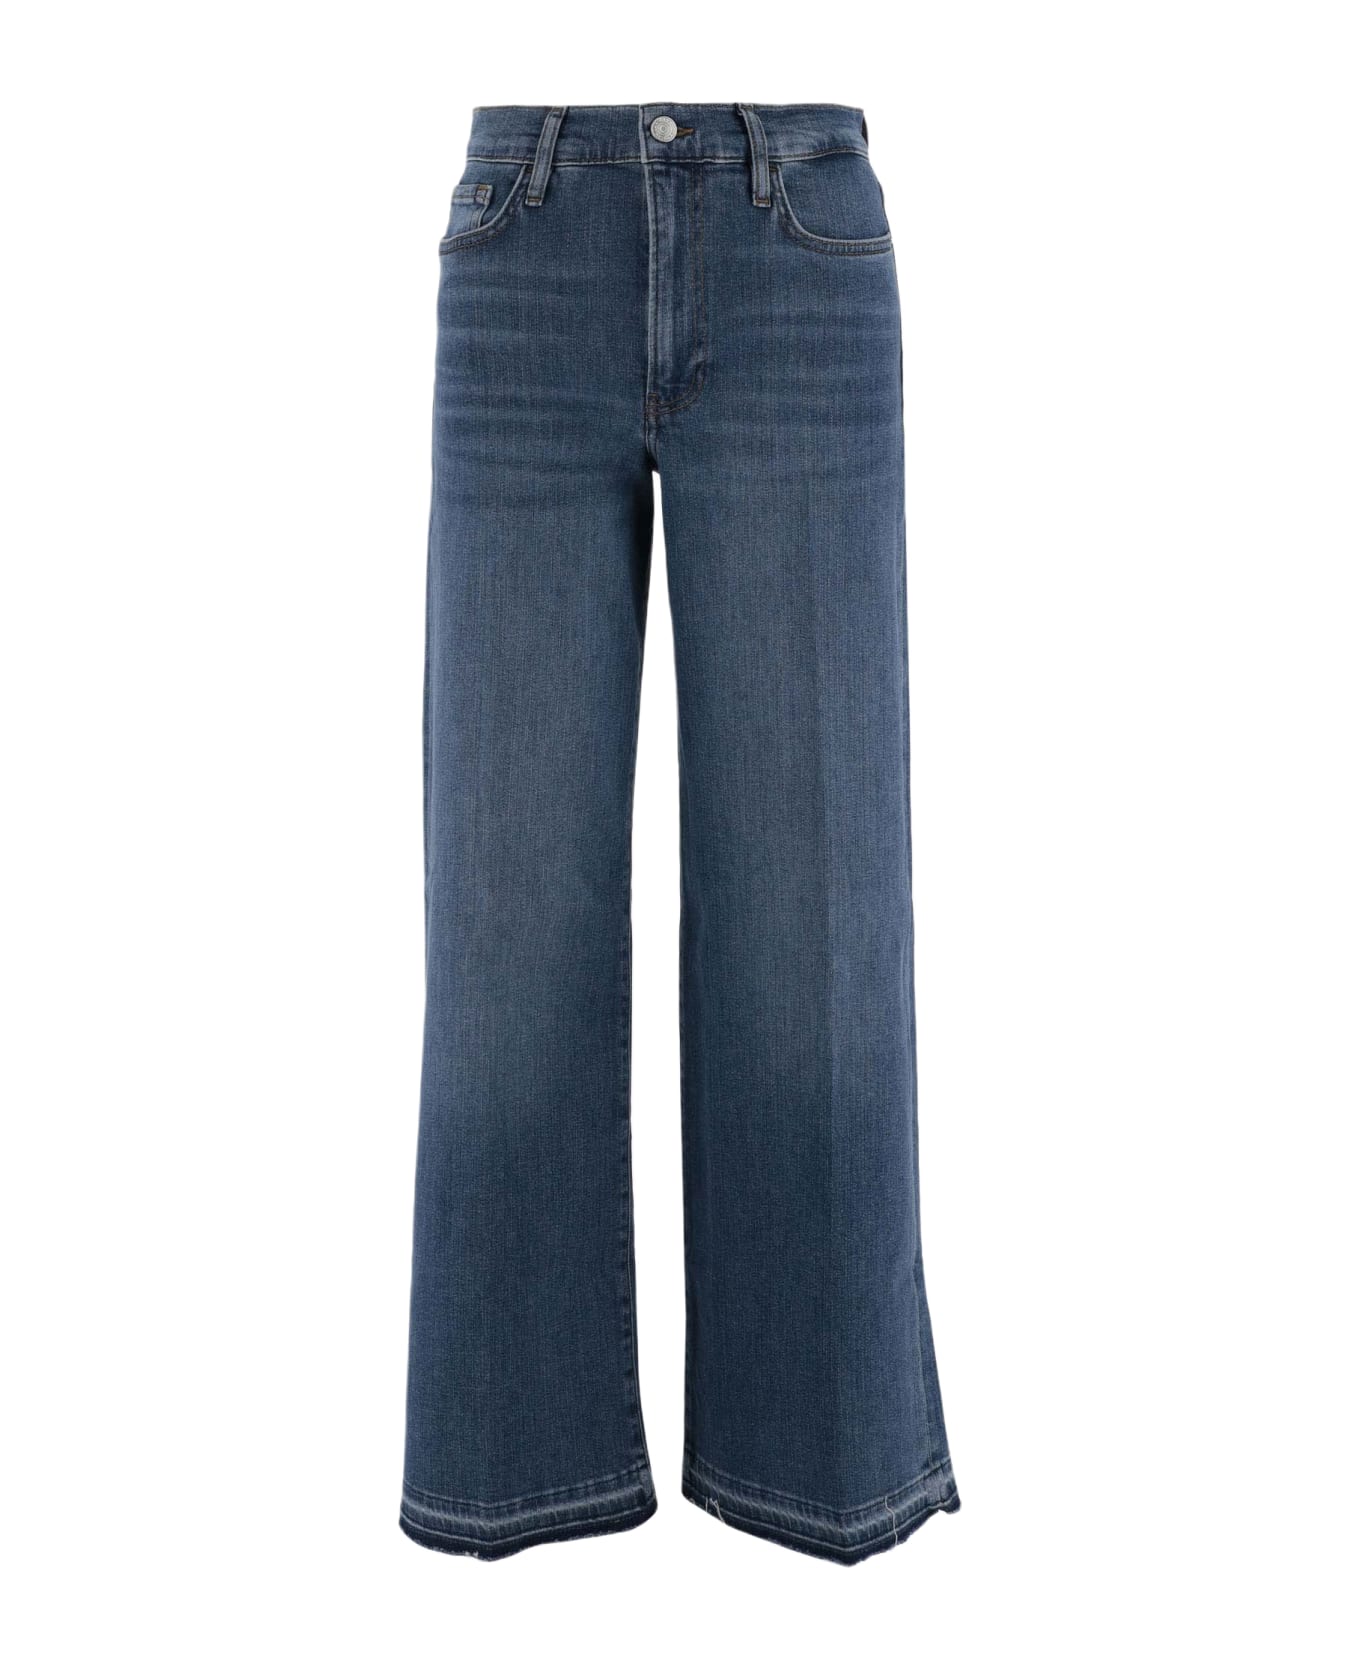 Frame Modal And Cotton Blend Jeans - Denim デニム